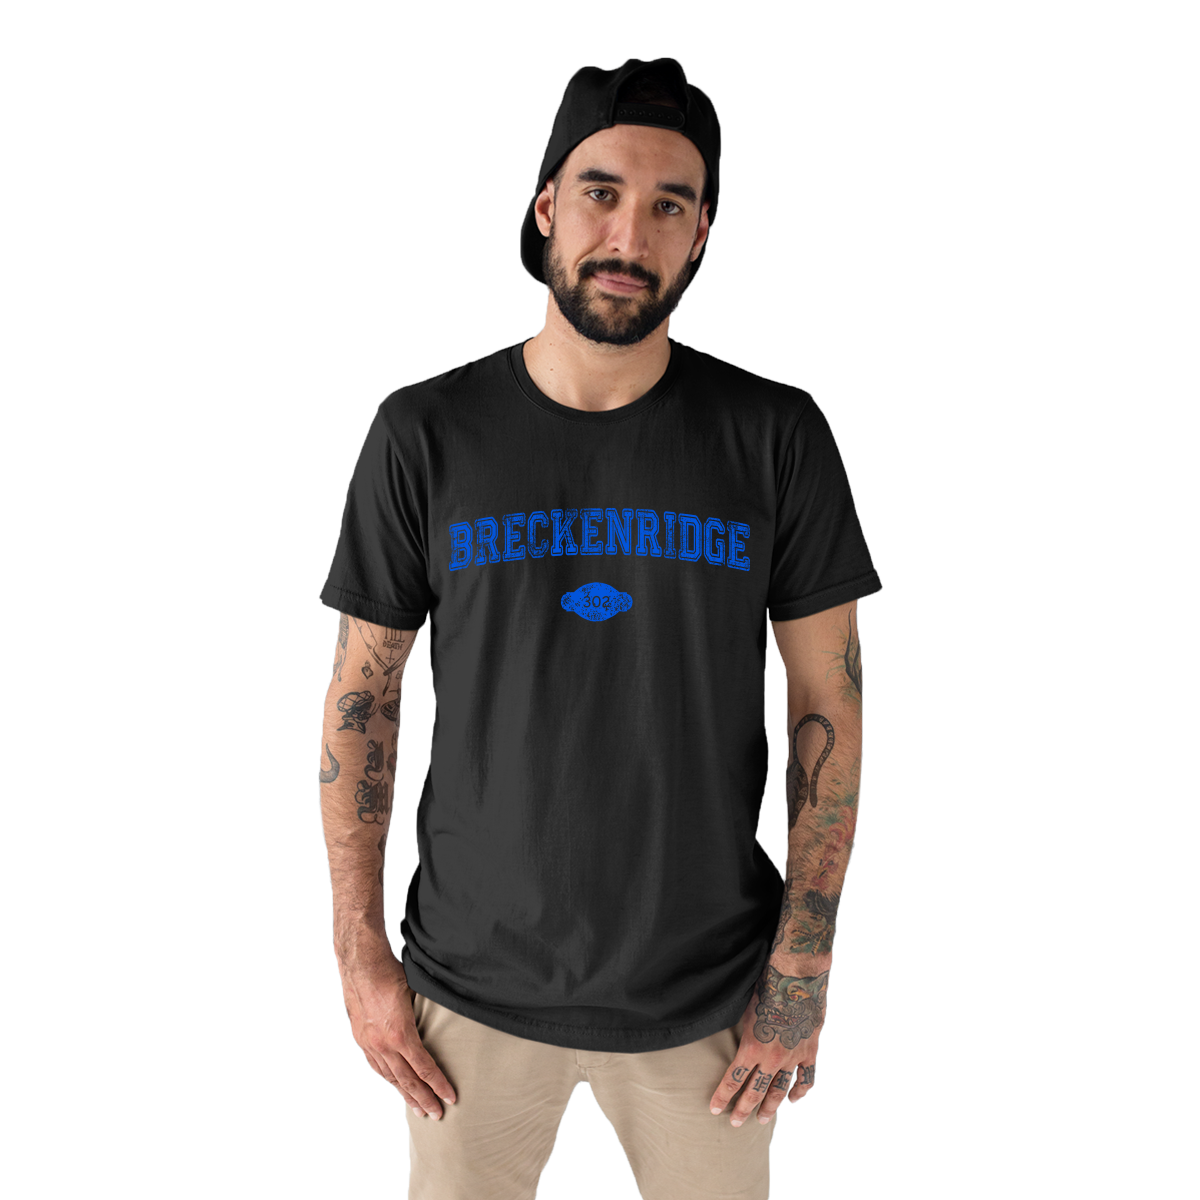 Breckenridge 1880 Represent Men's T-shirt | Black